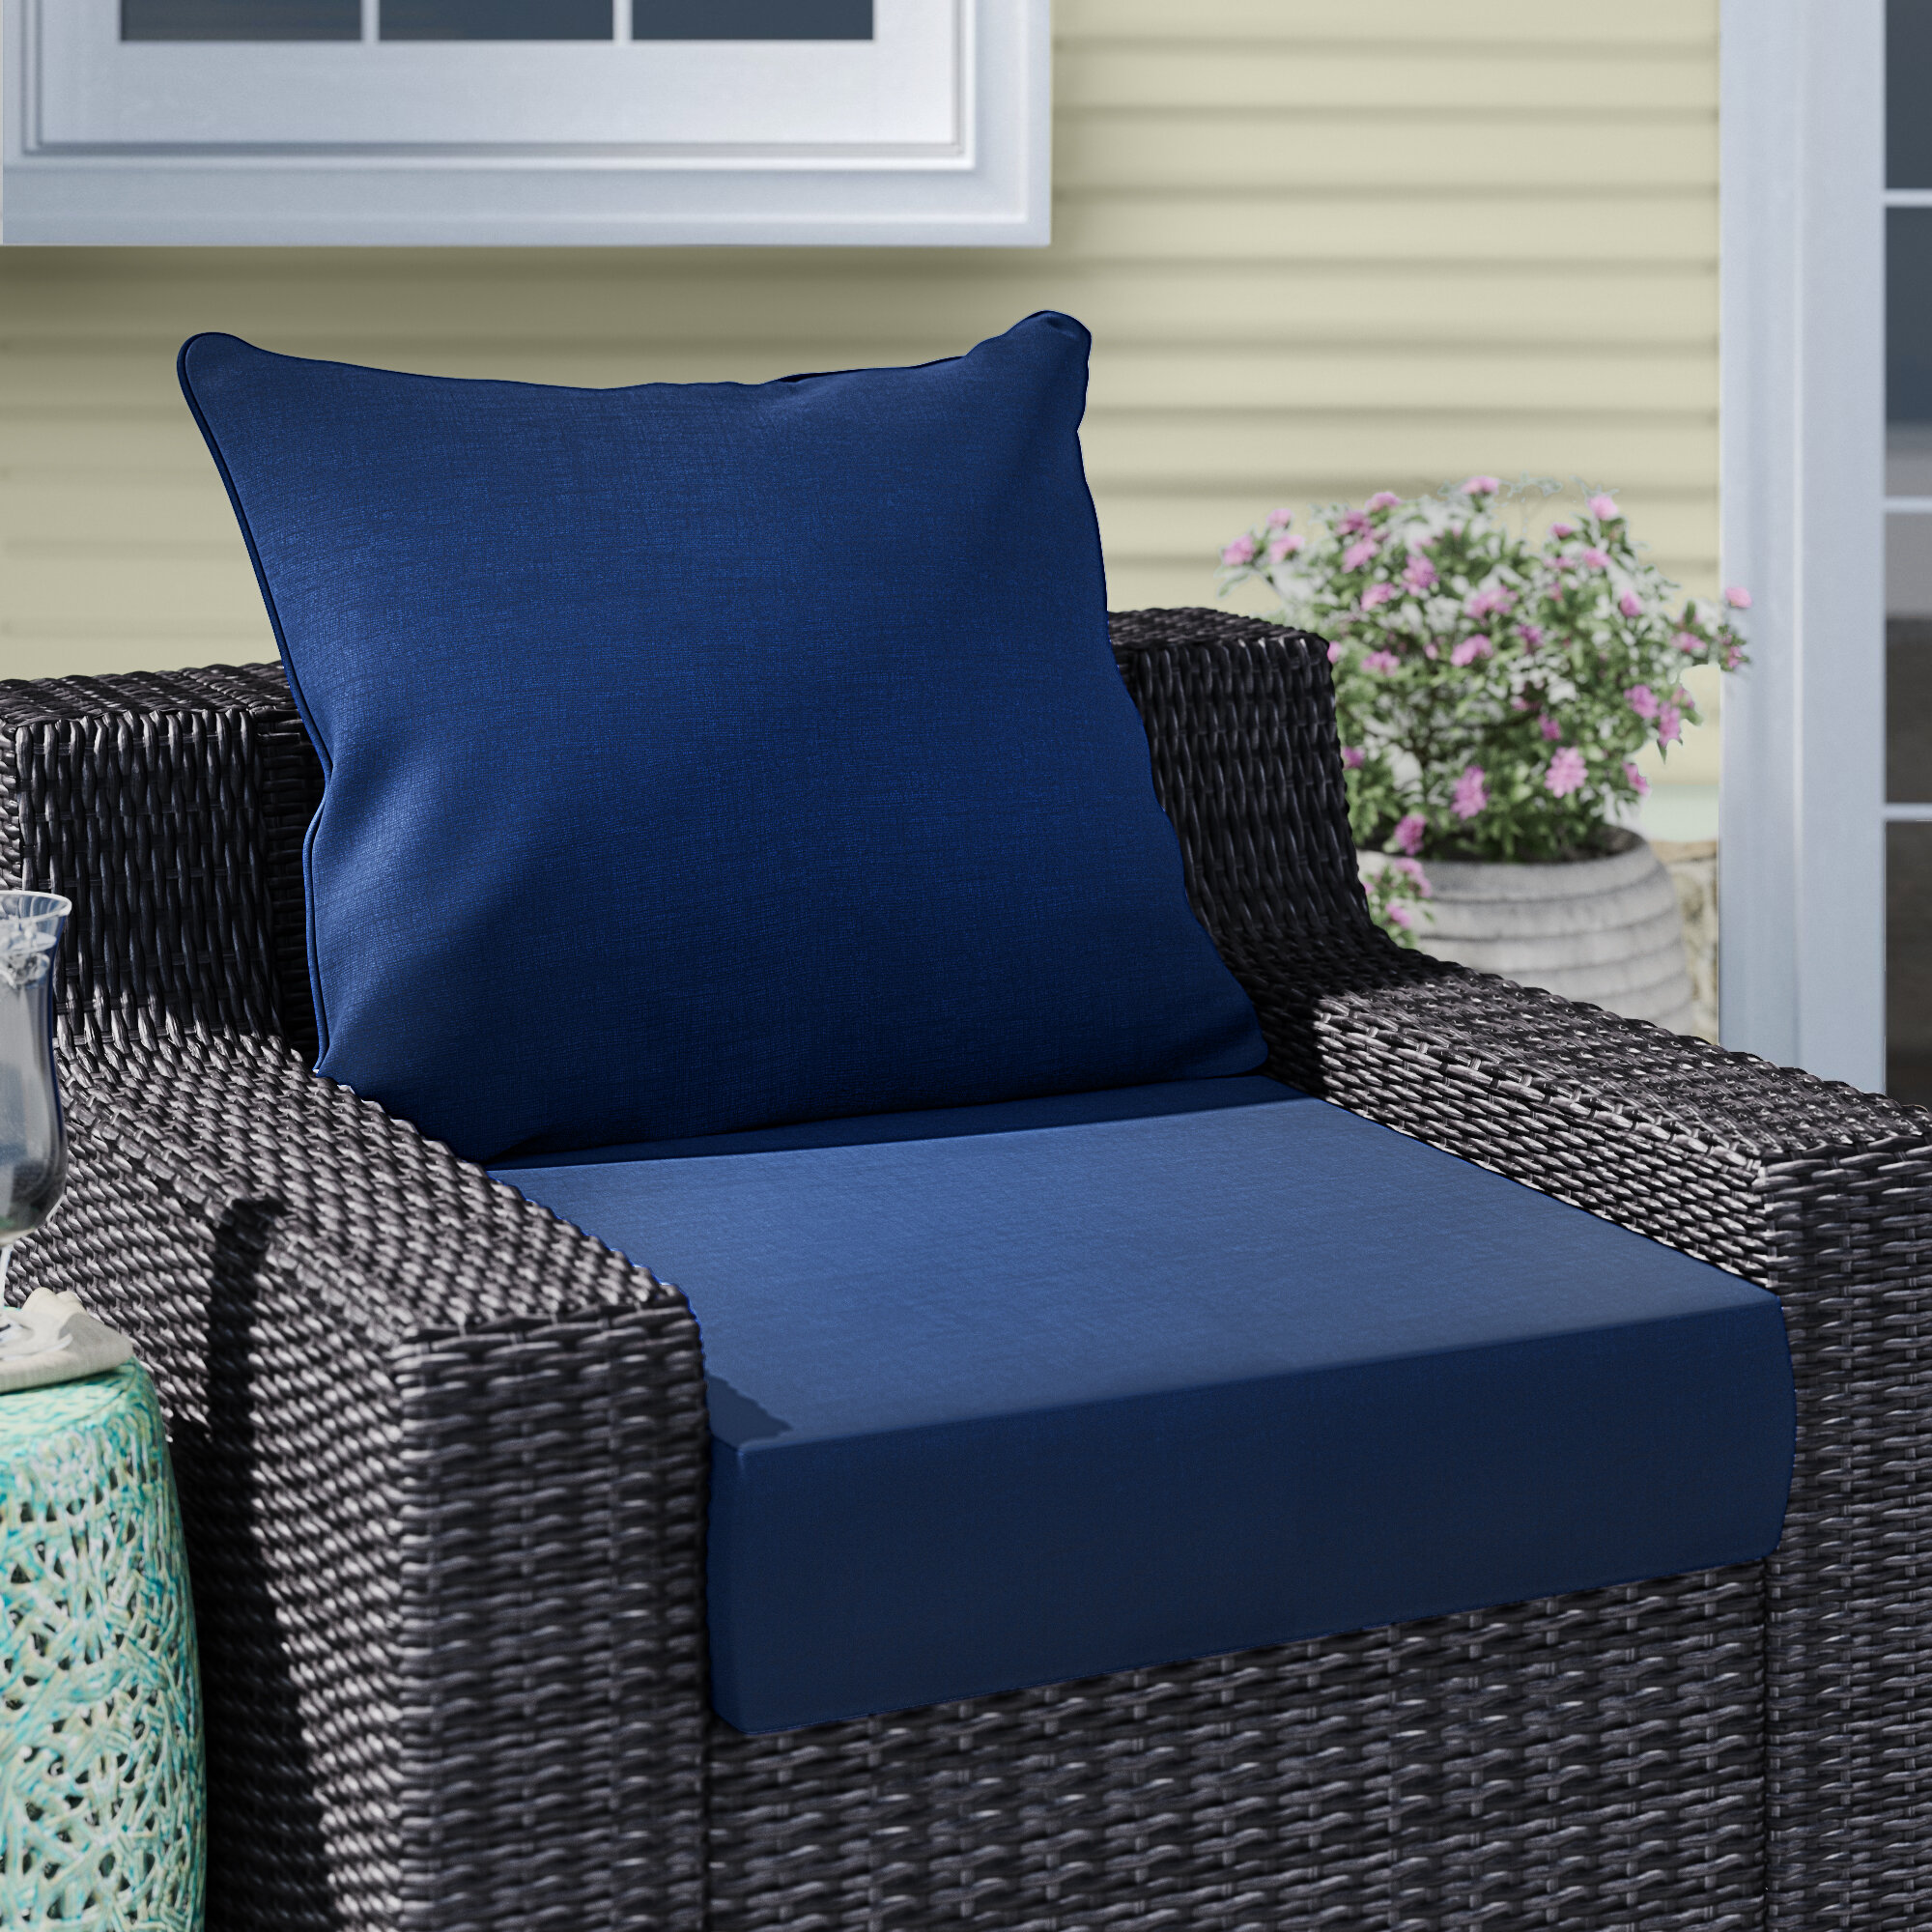 6x Outdoor Seat Cushion High Backrest Garden Furniture Chair Water-repellent 